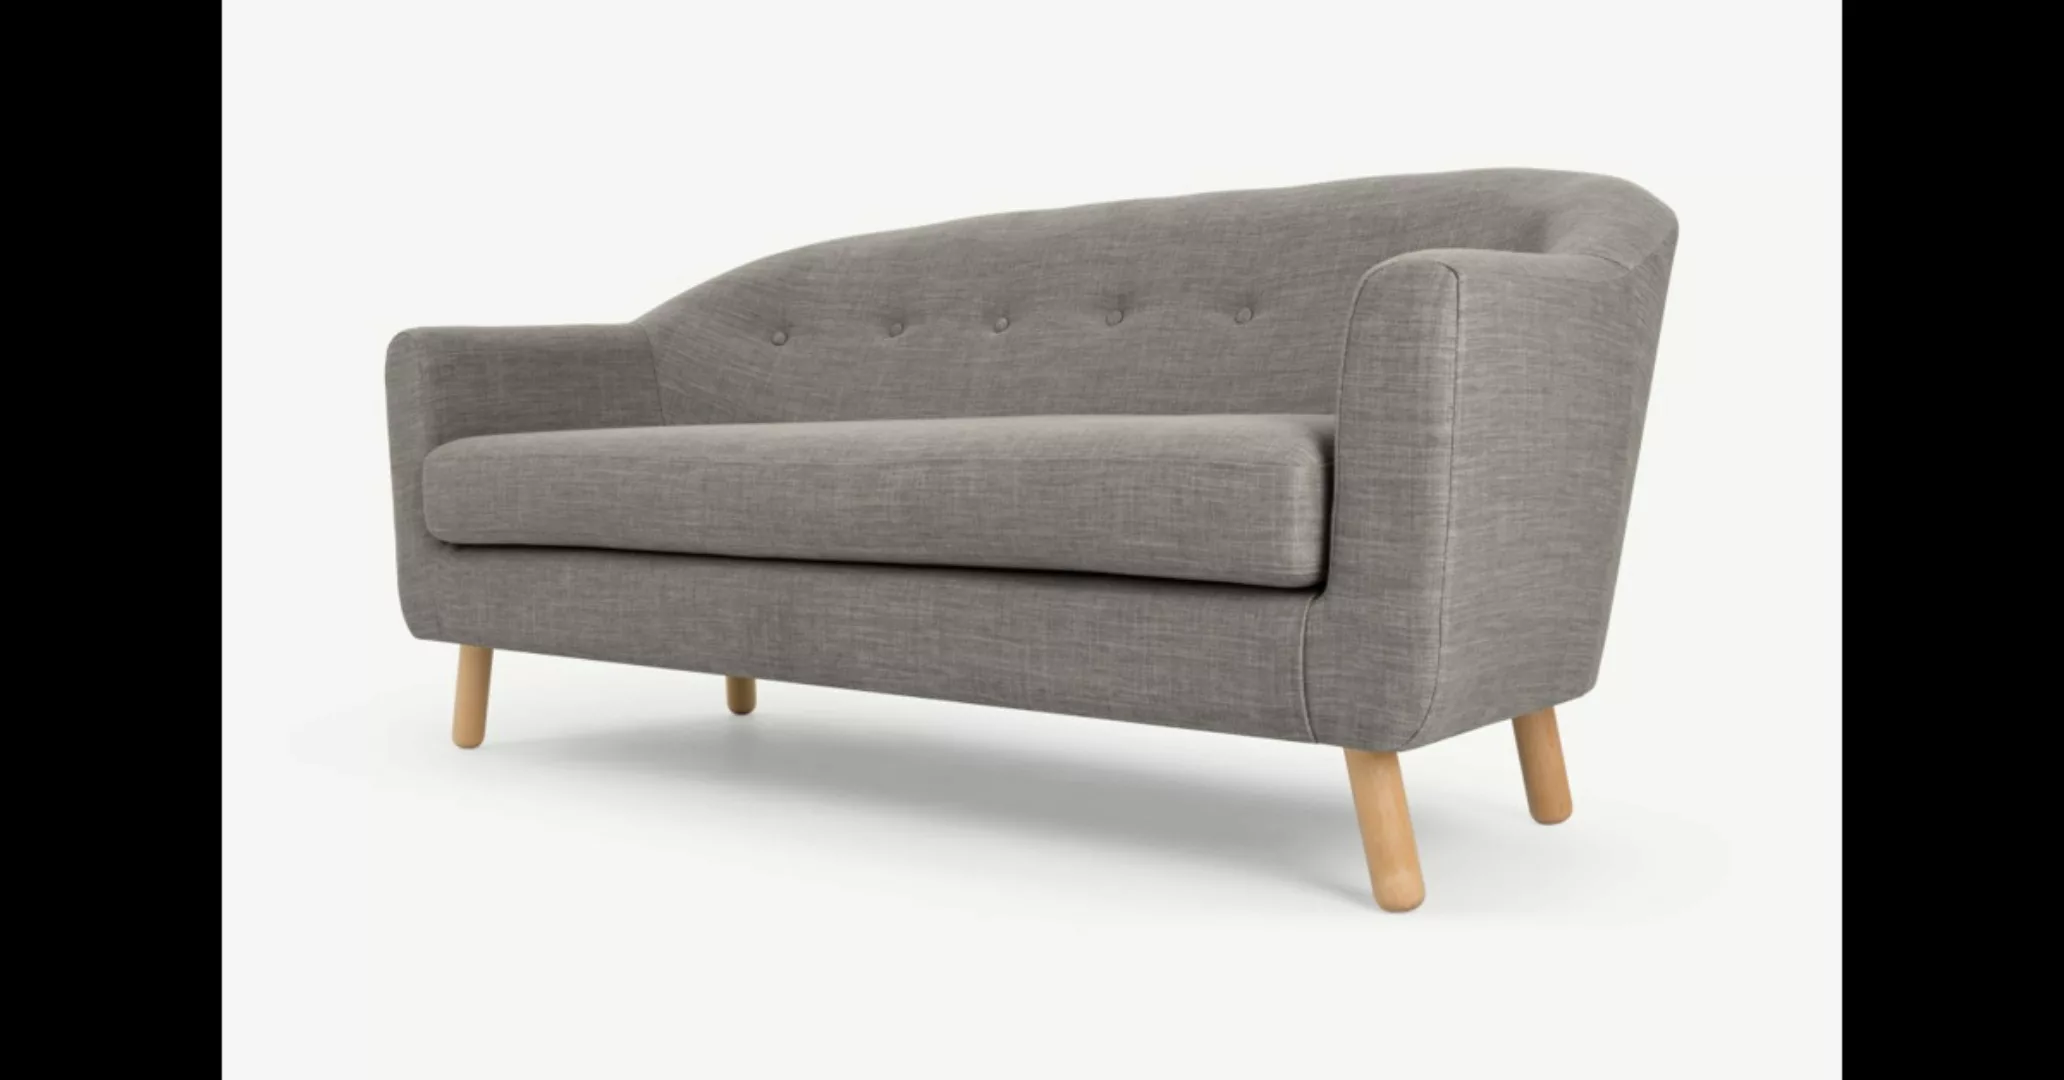 Lottie 3-Sitzer Sofa, Kalkgrau - MADE.com günstig online kaufen